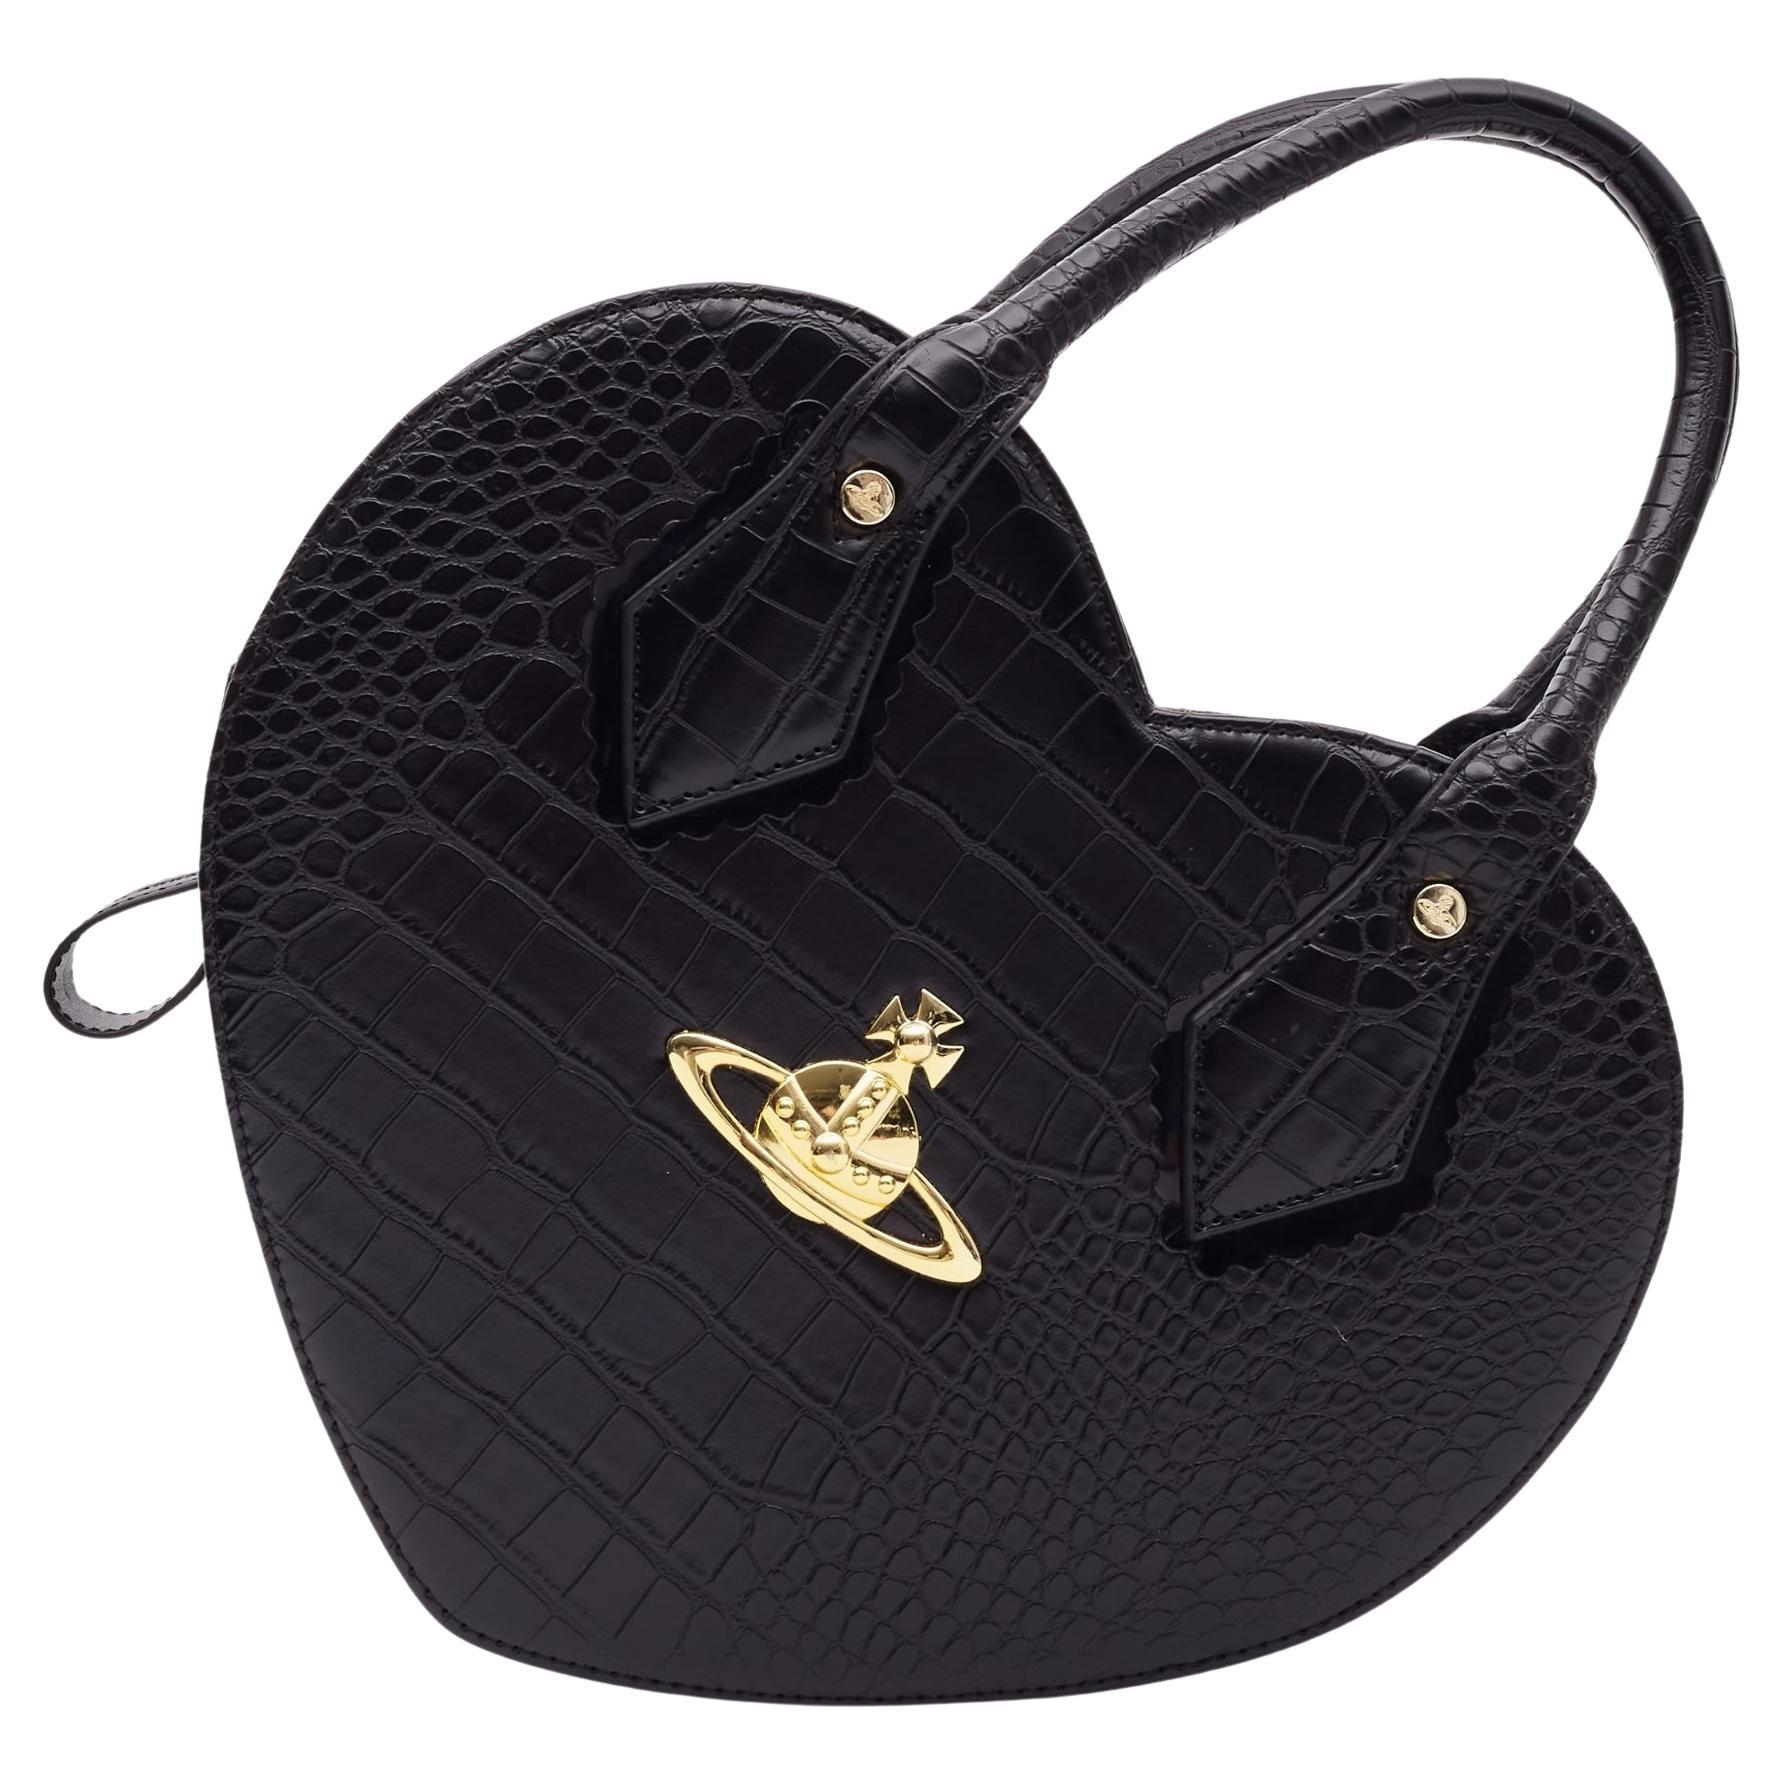 How do I authenticate a Vivienne Westwood bag?